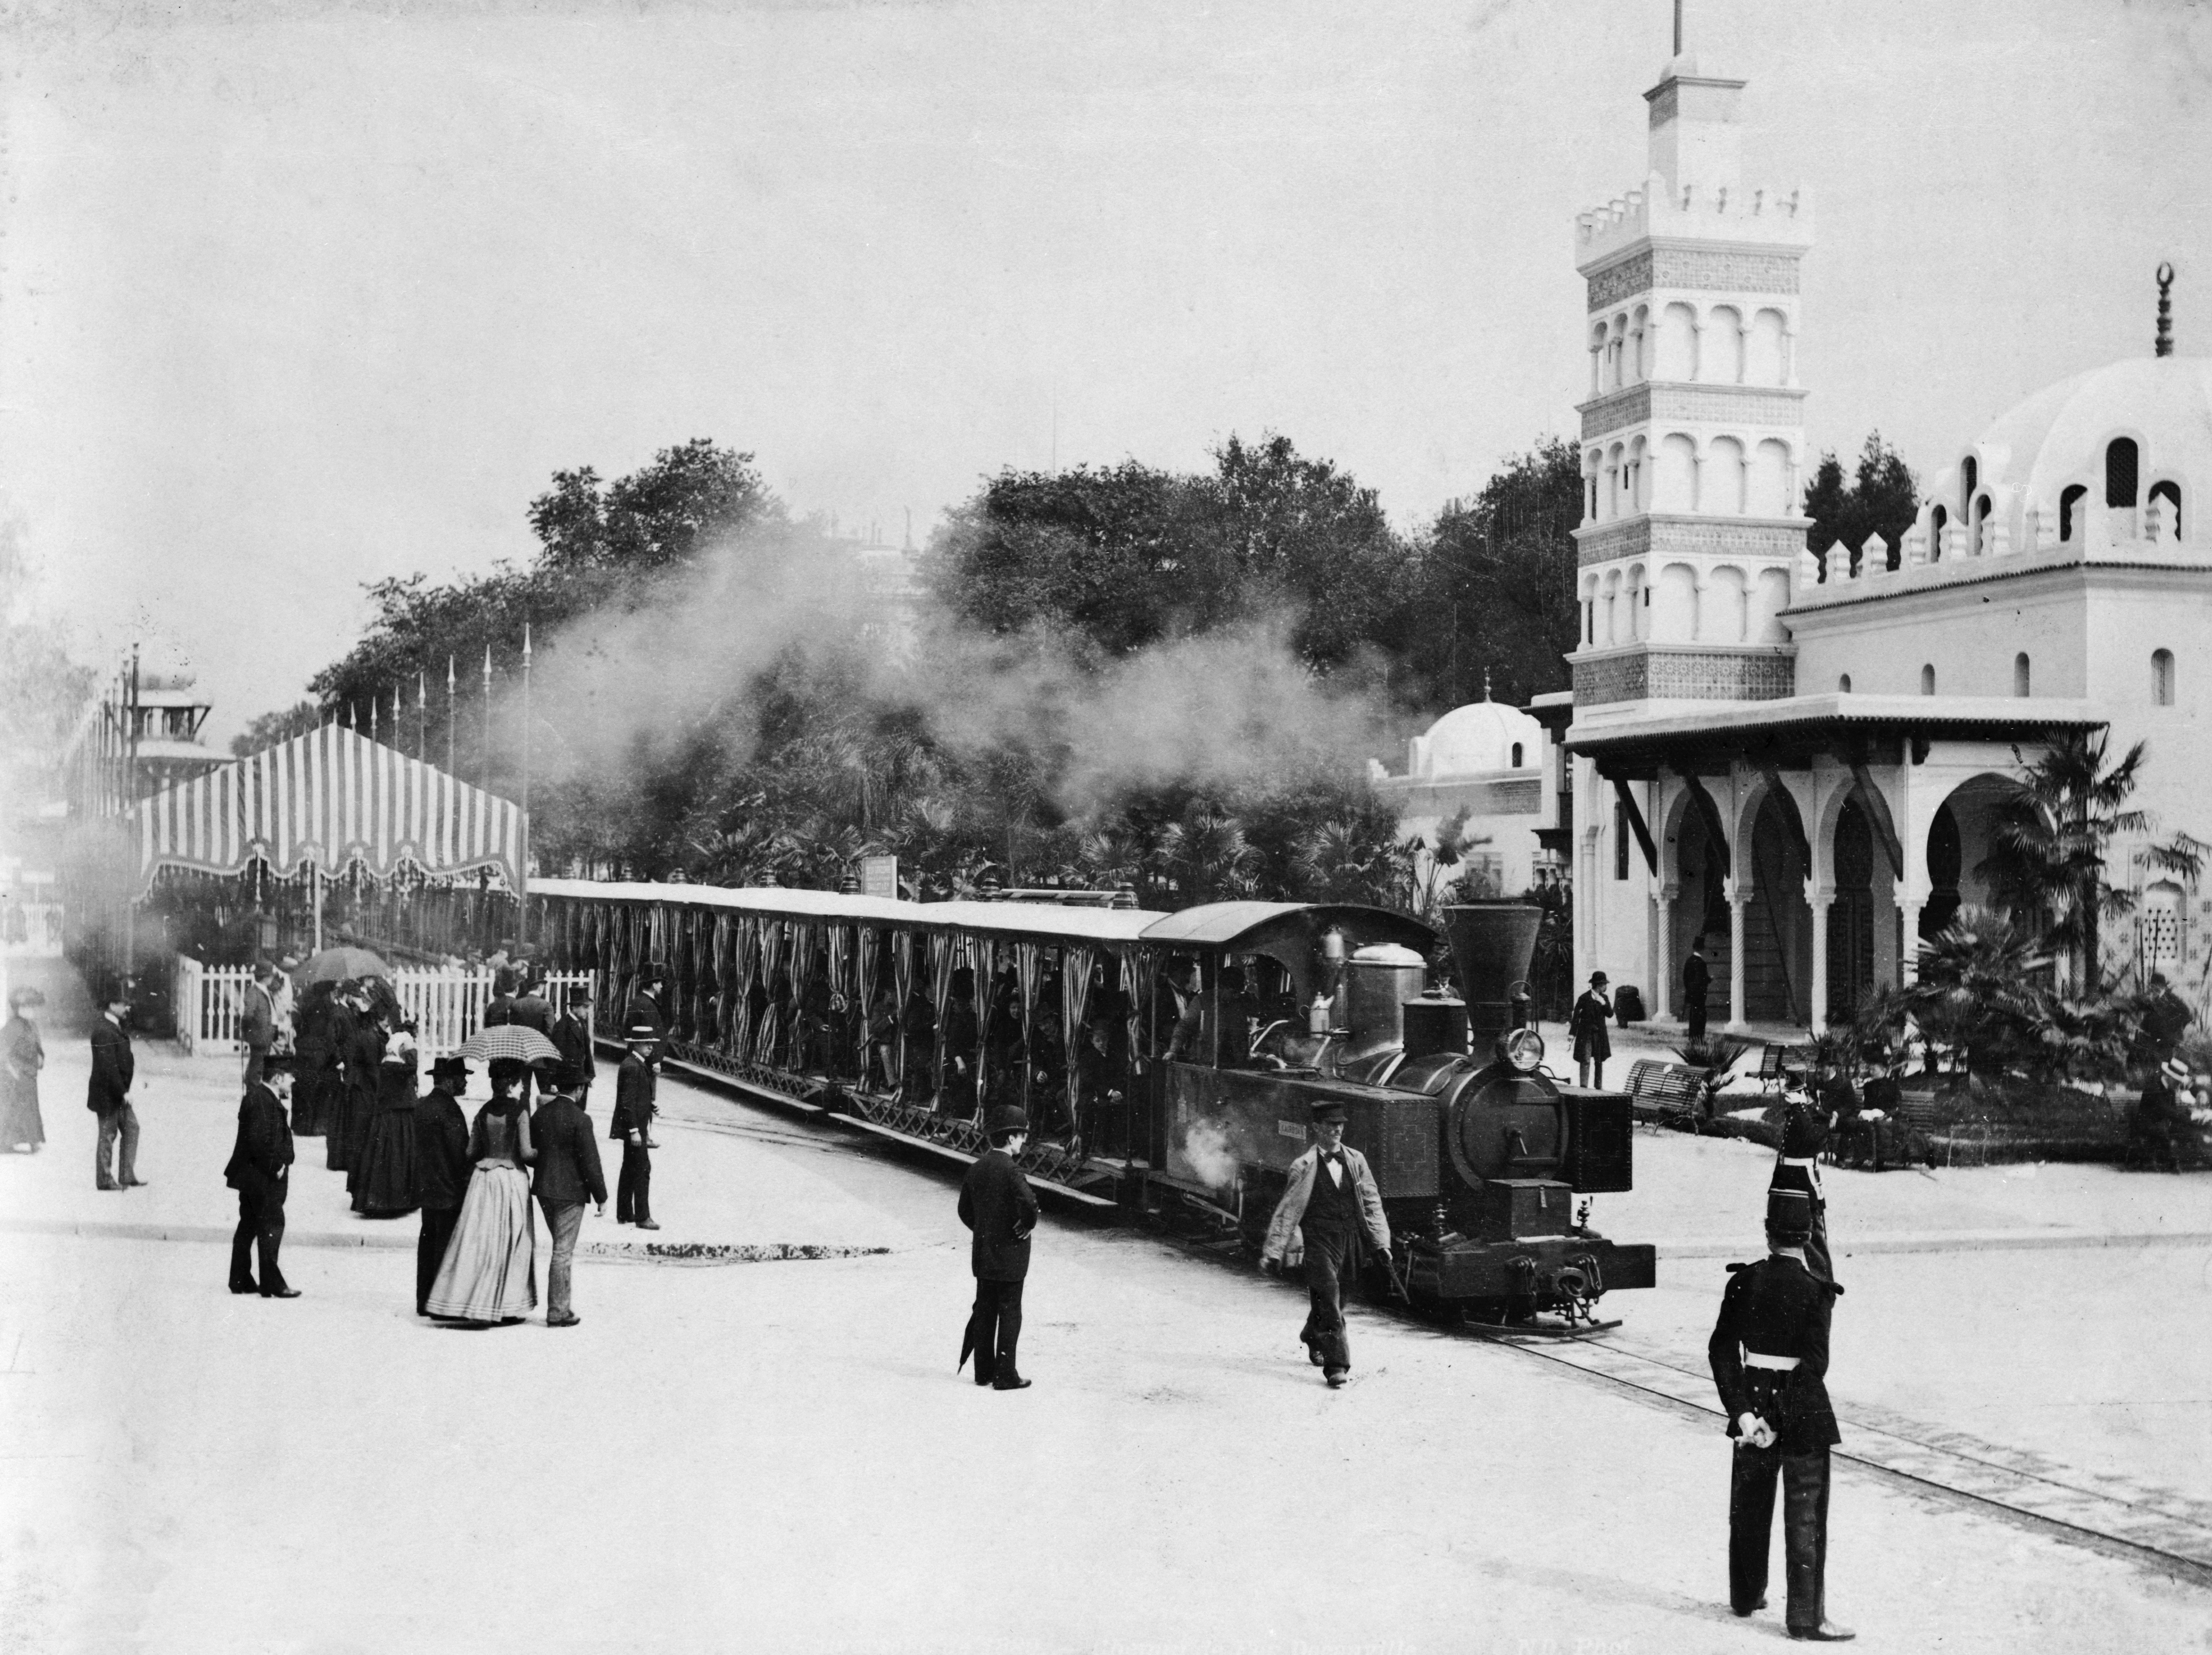 Paris Exposition train 1889.jpg